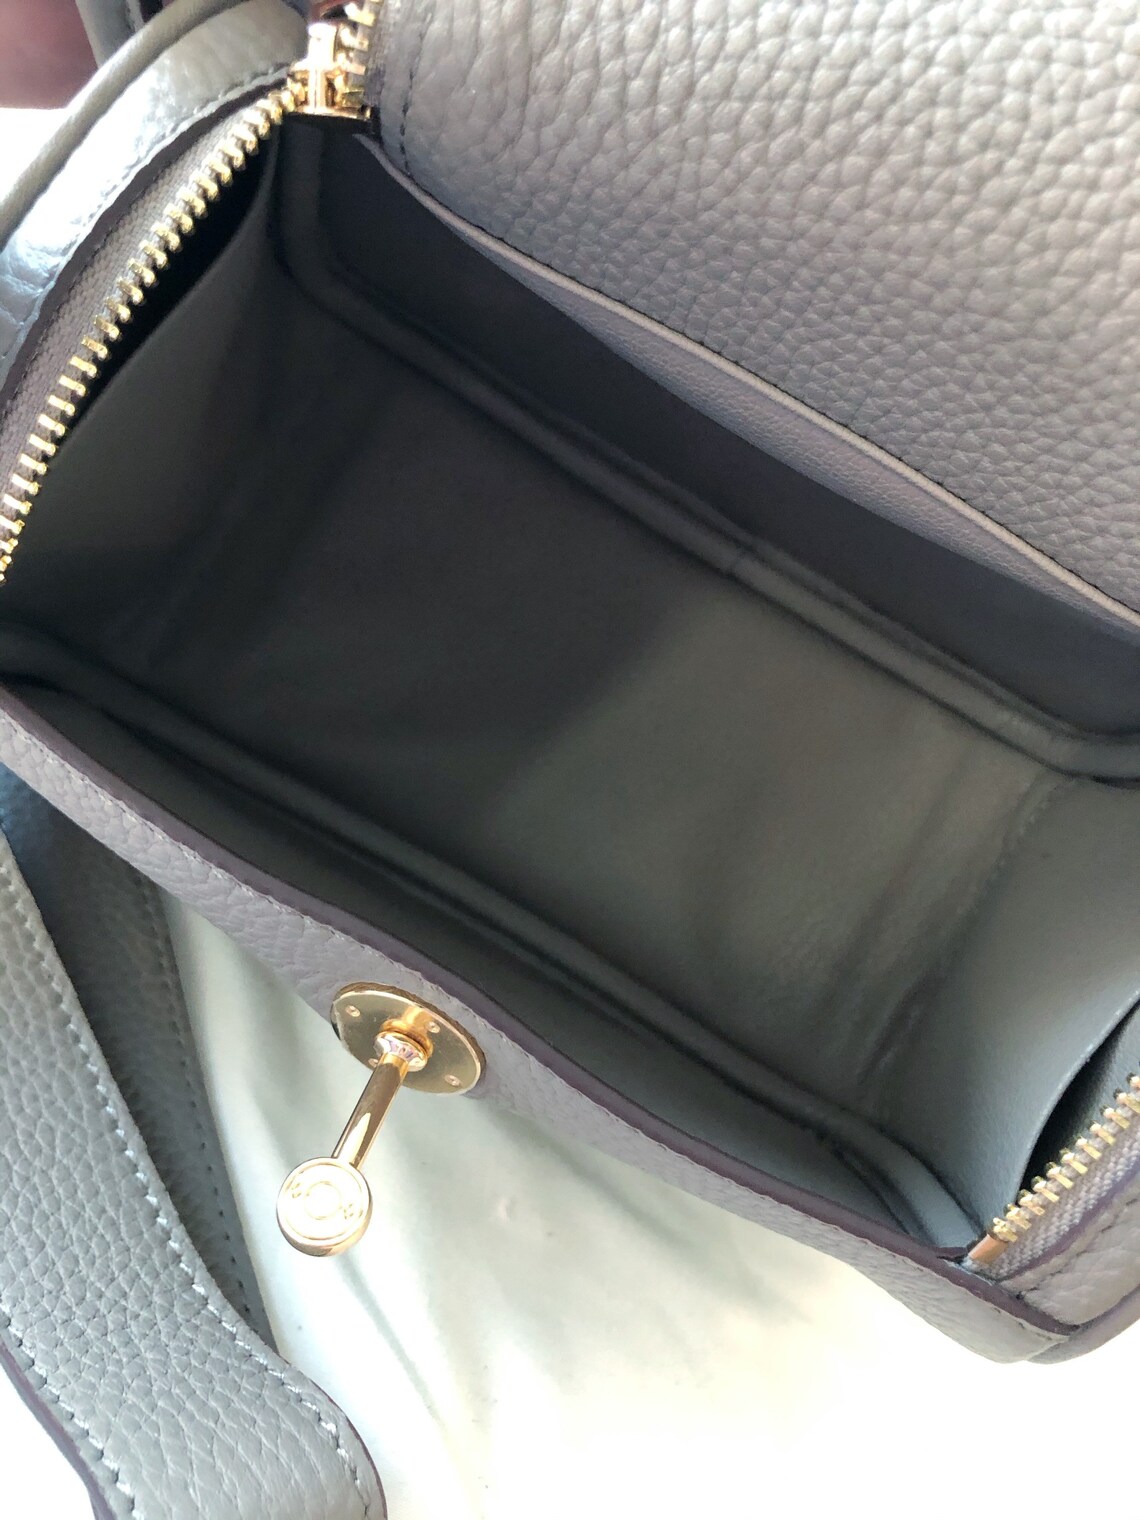 Mini Leather Crossbody Bag black leather crossbody bag small | Etsy